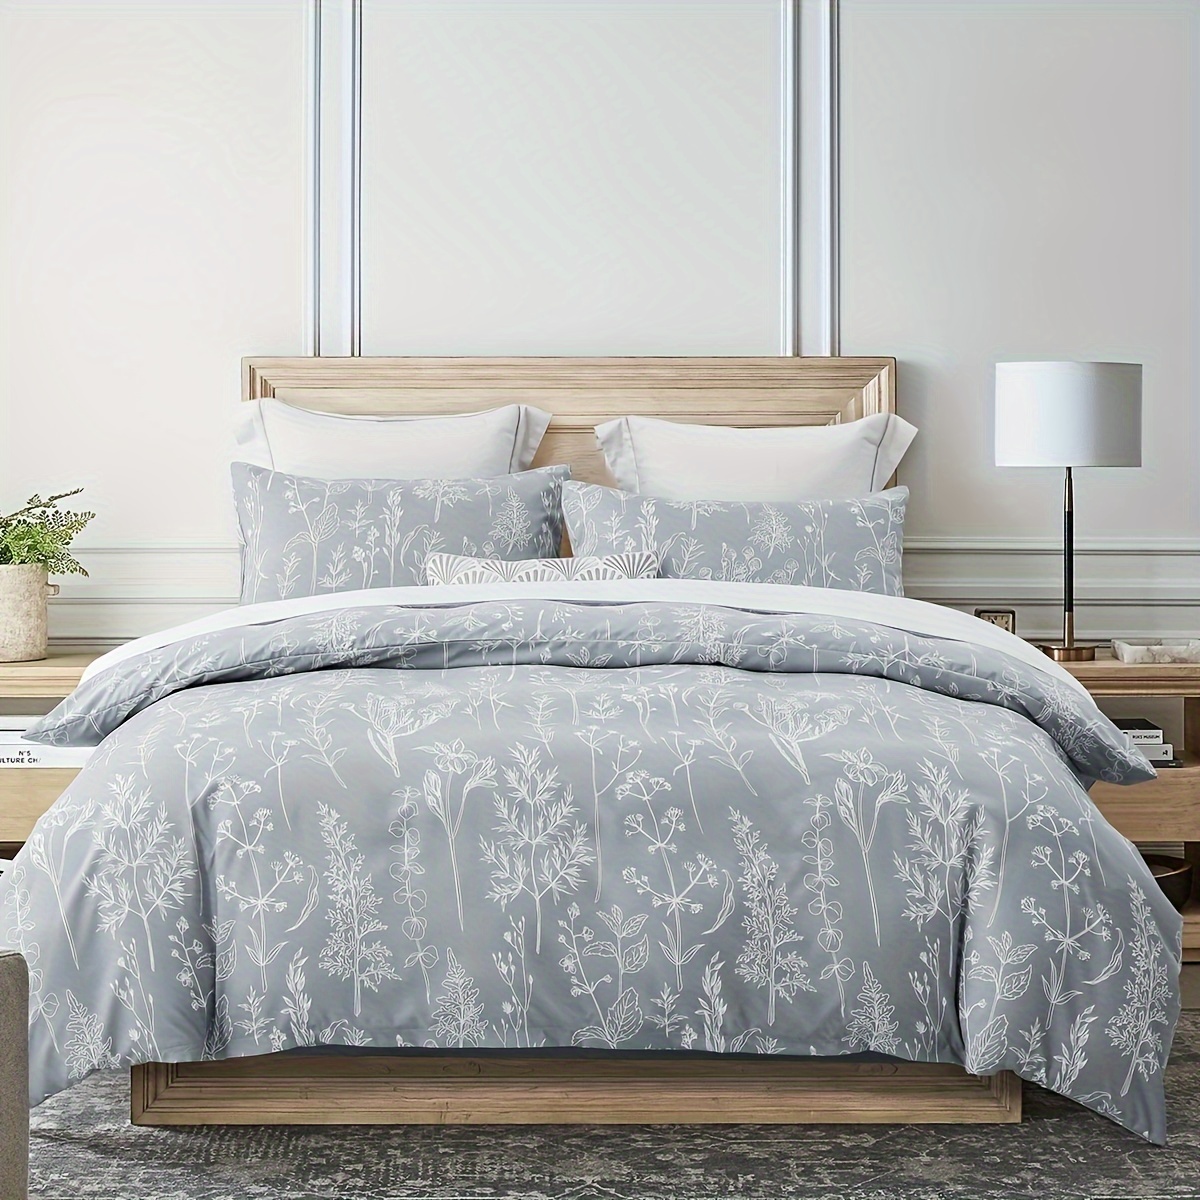 

Comforter Set, Soft Microfiber All Season Comforter, Gray Printed With White Botanical Pattern, Down Alternative Machine Washable